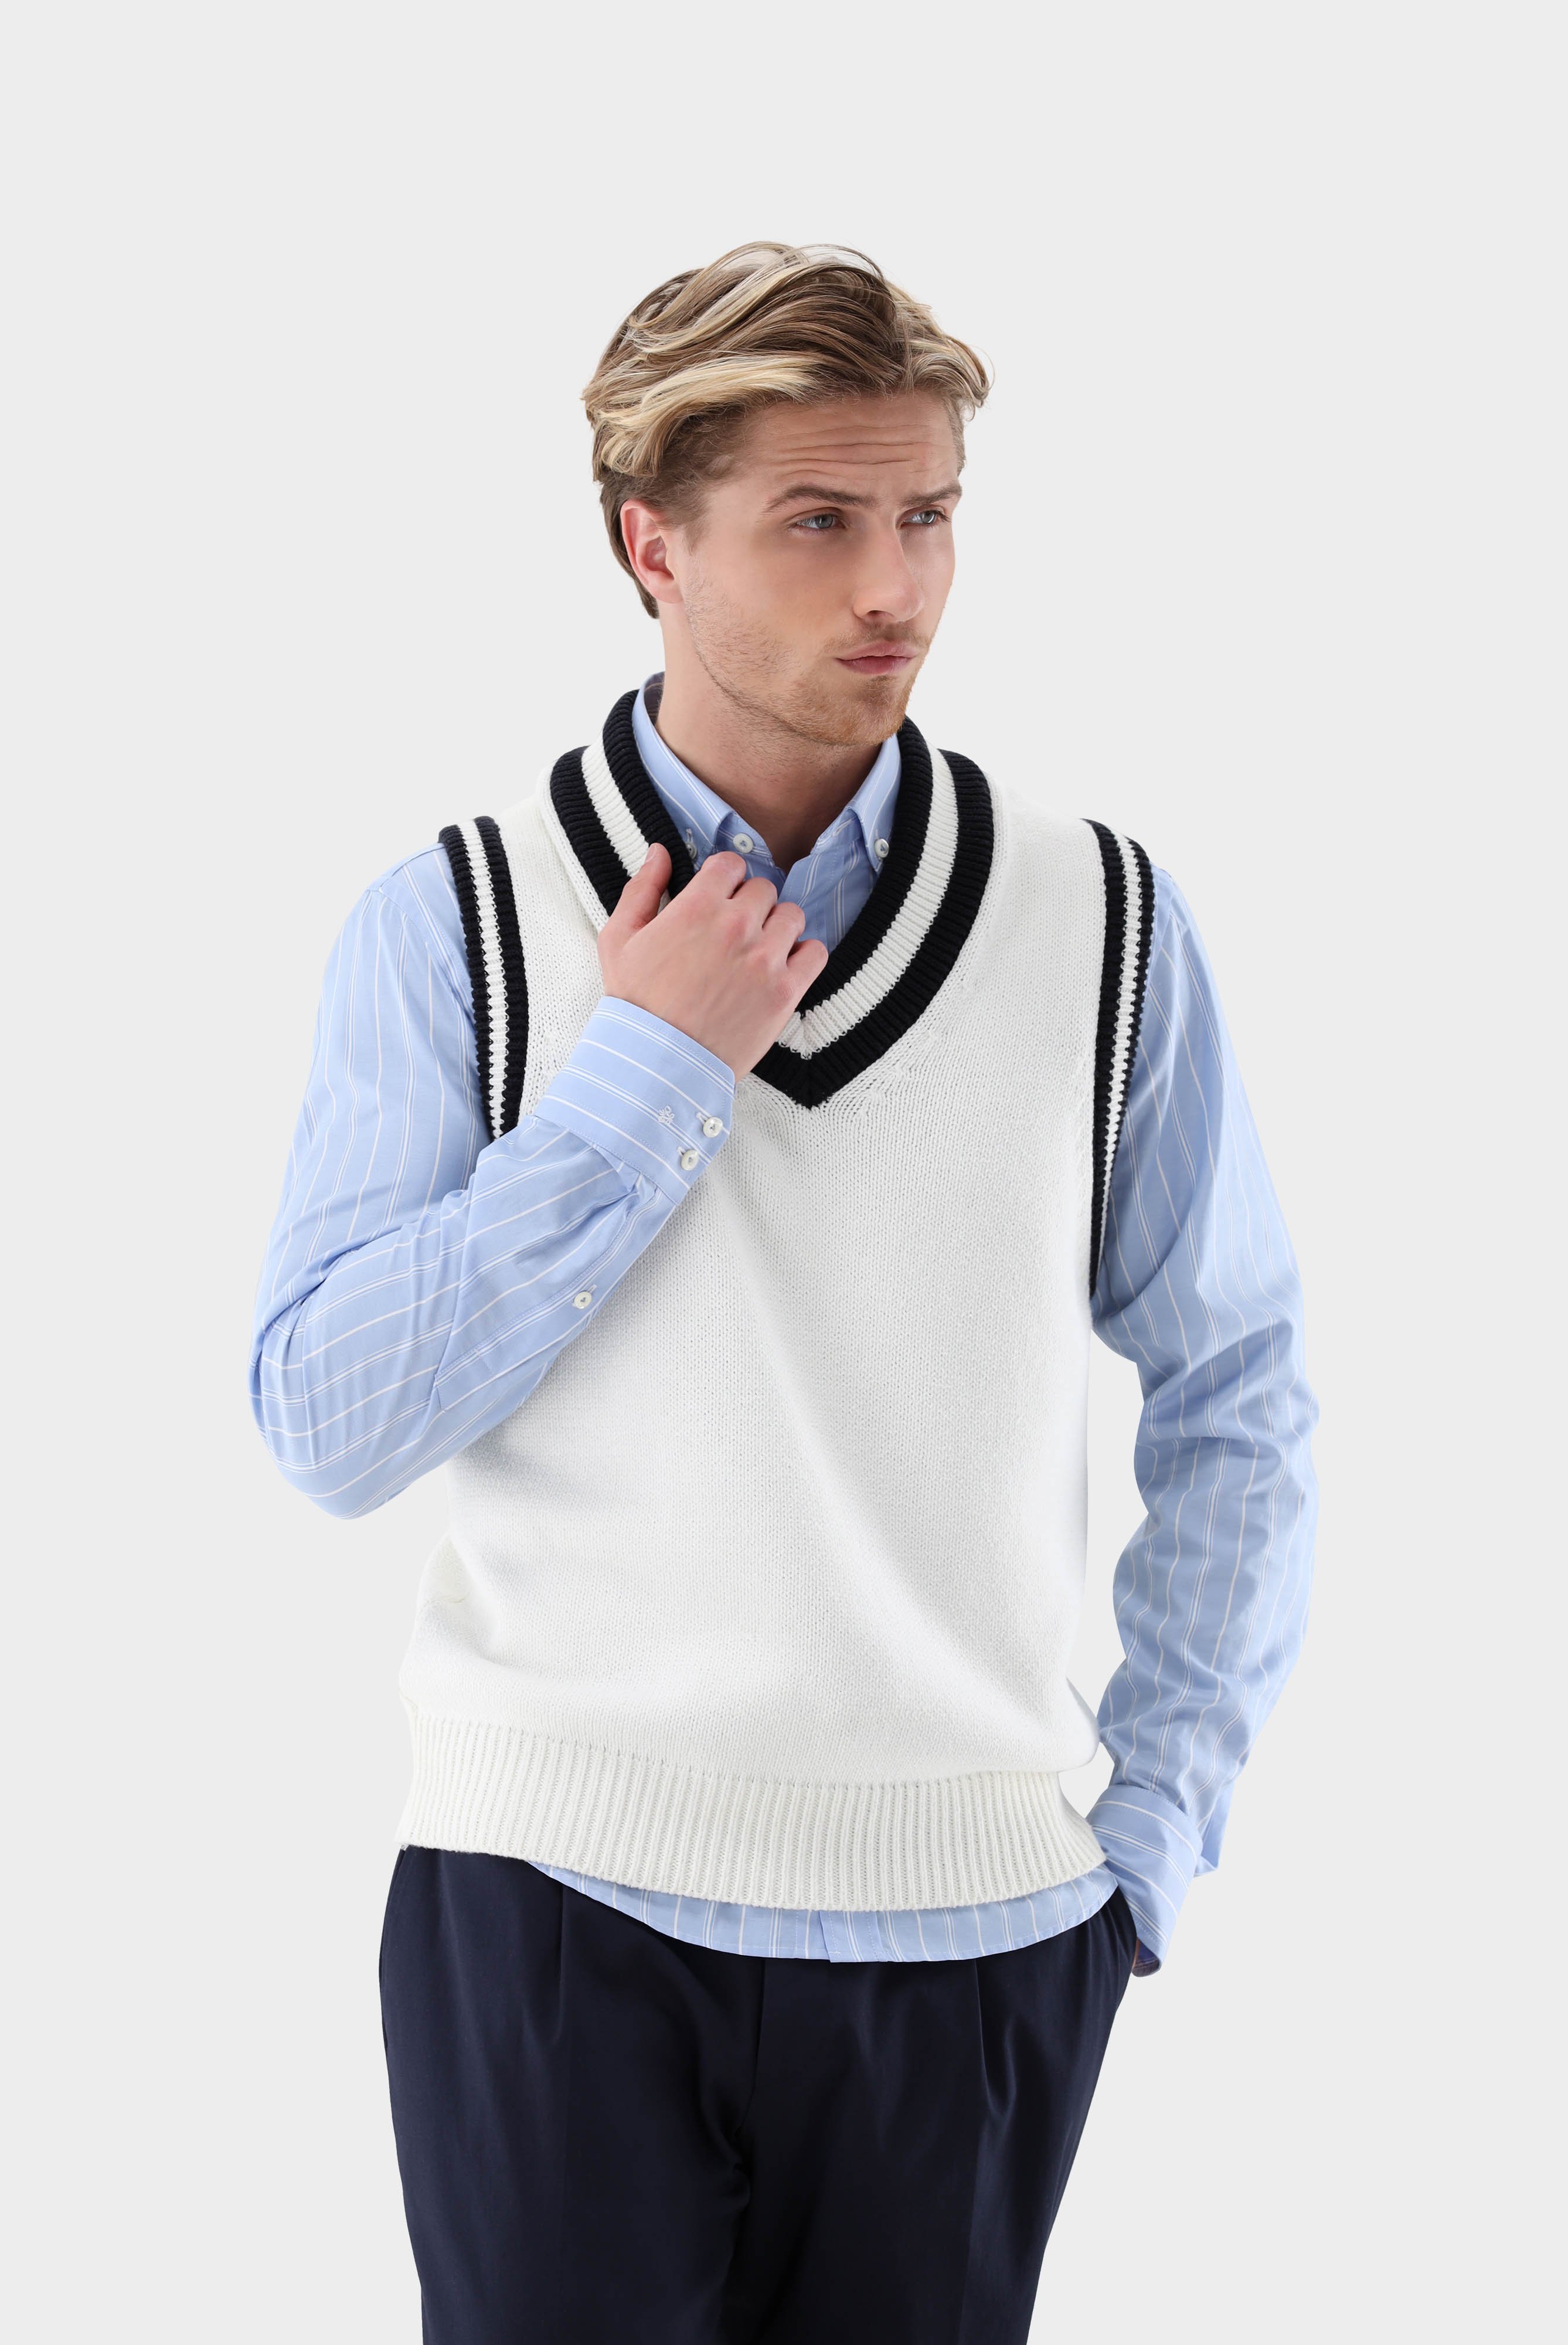 Retro Tennis Sweater Vest Made of Cotton